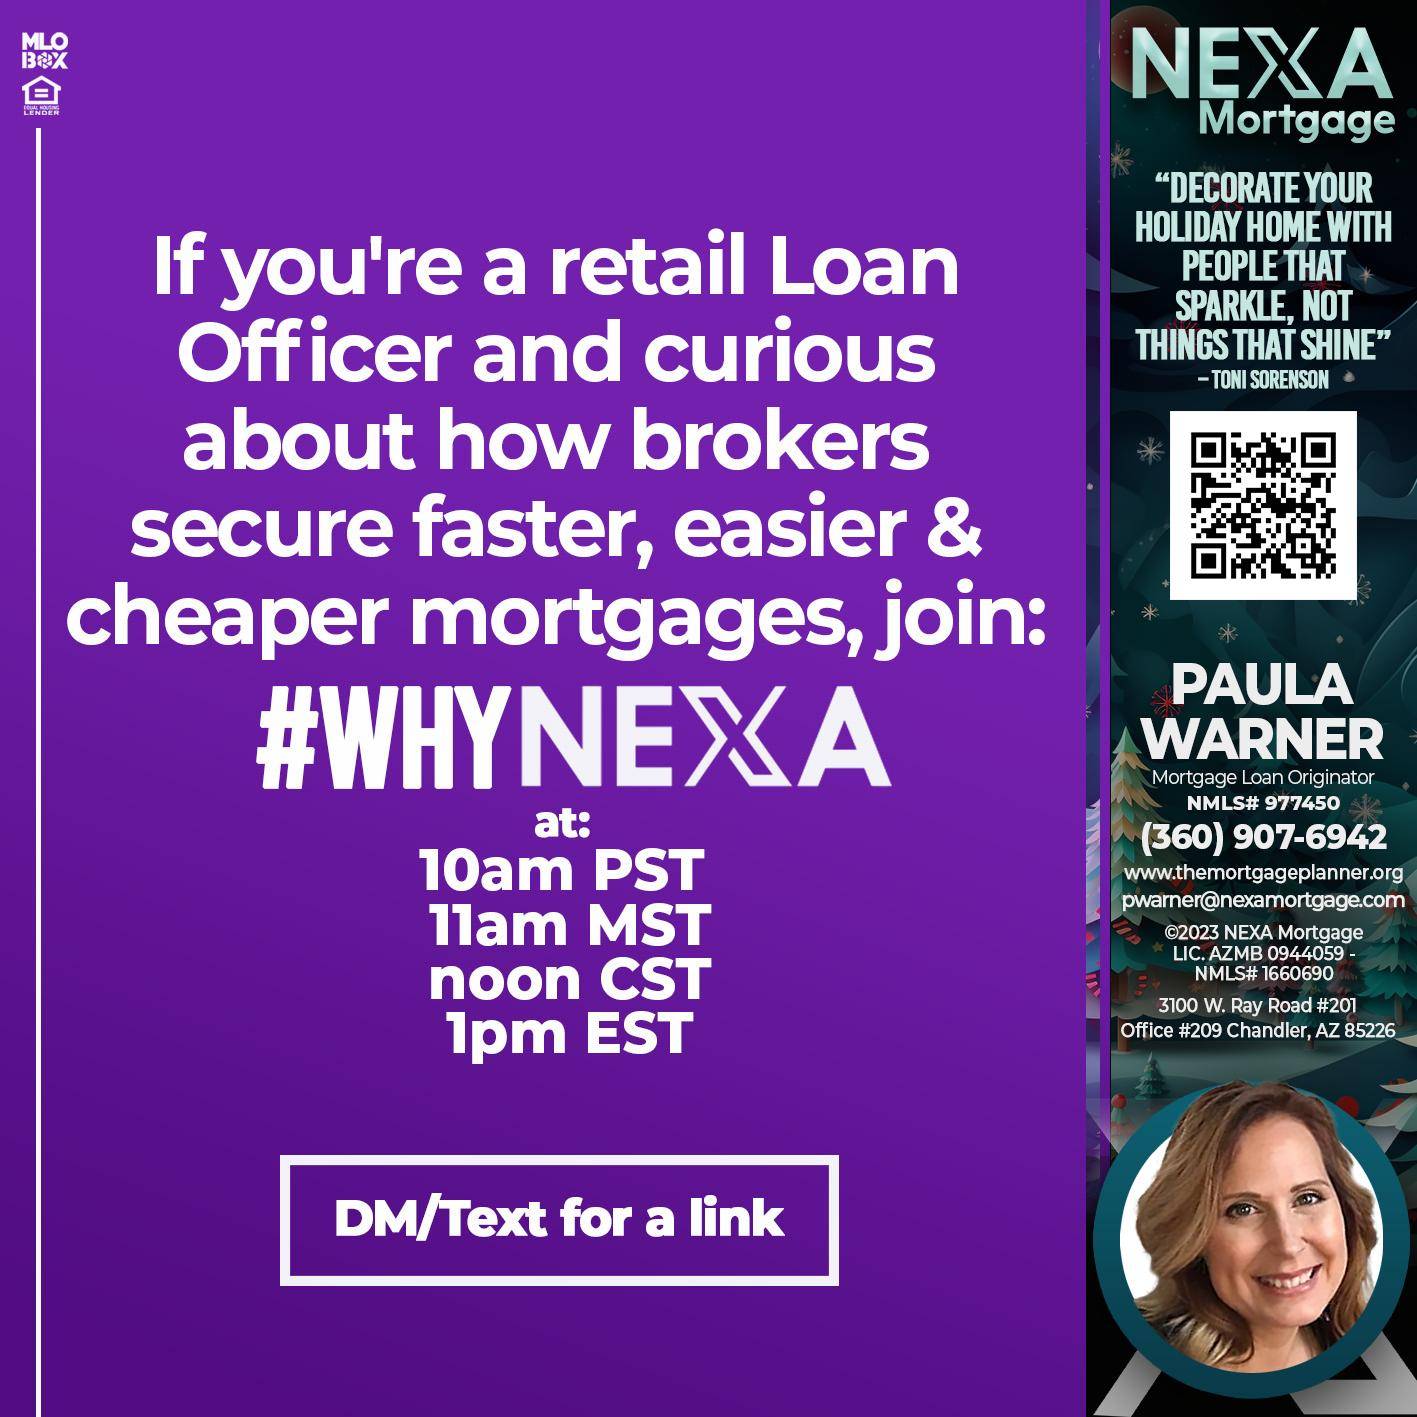 WHY NEXA - Paula Warner -Mortgage Loan Originator